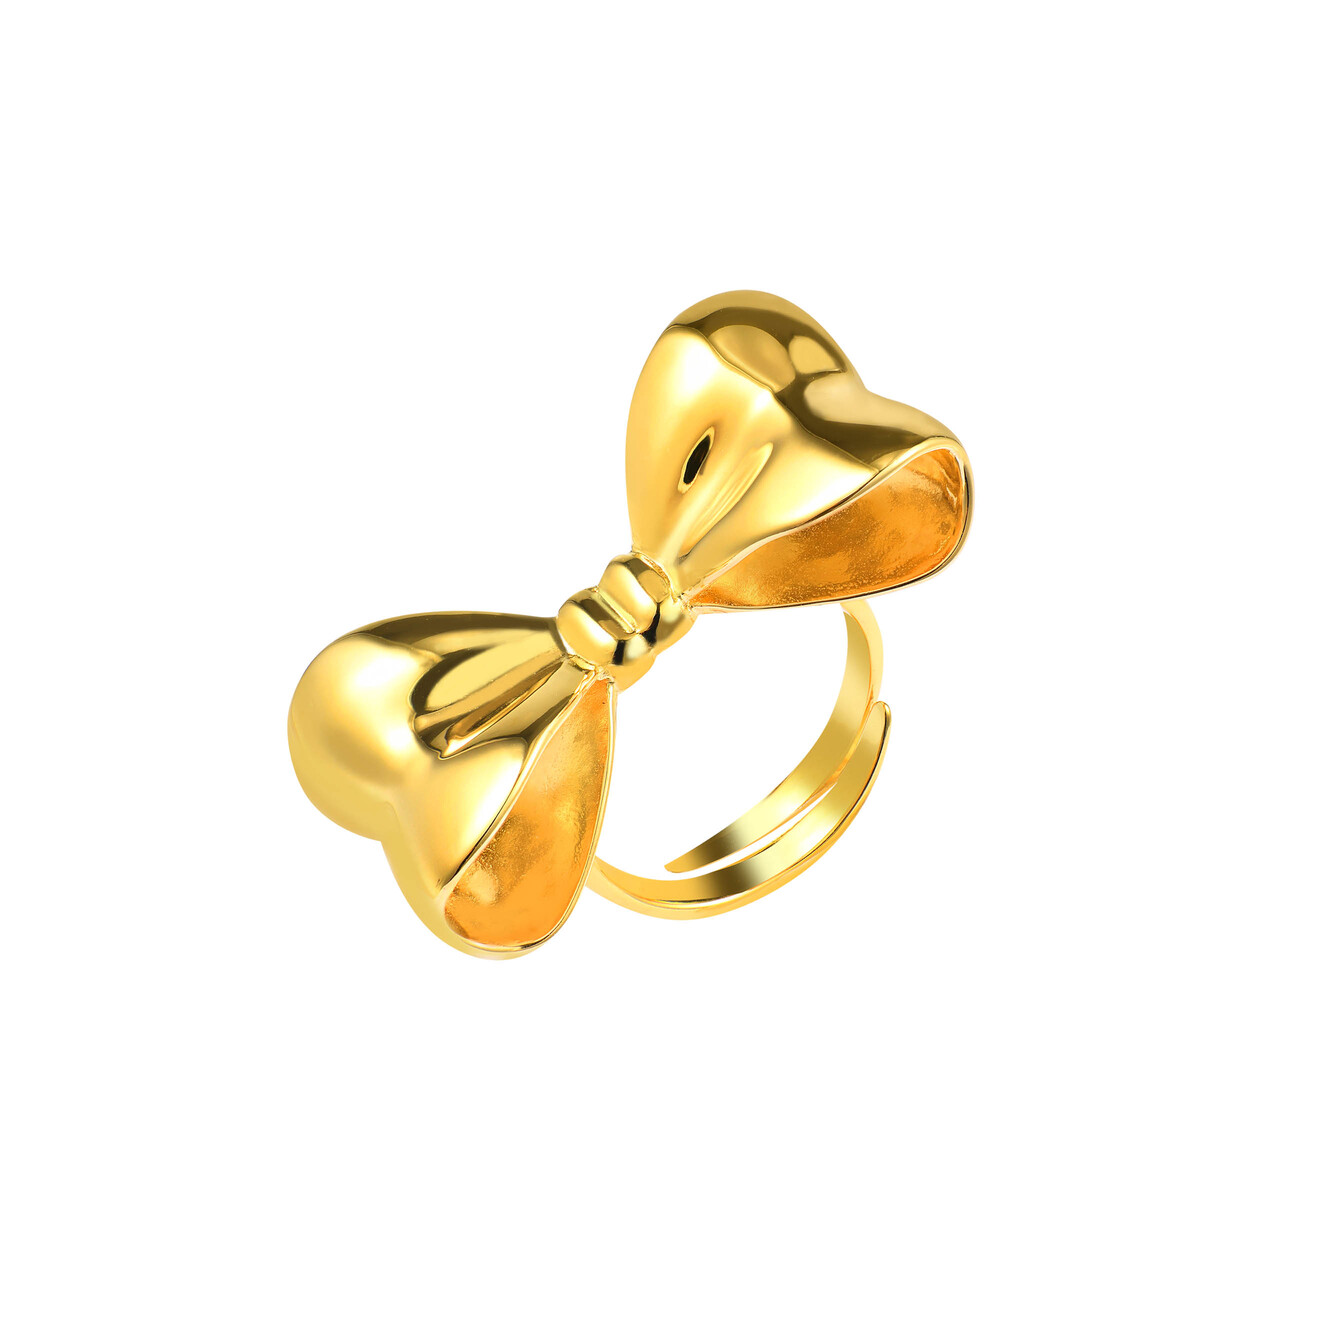 WANNA?BE! Золотистое кольцо-бант из серебра issue 2 золотистое кольцо small point из гематита